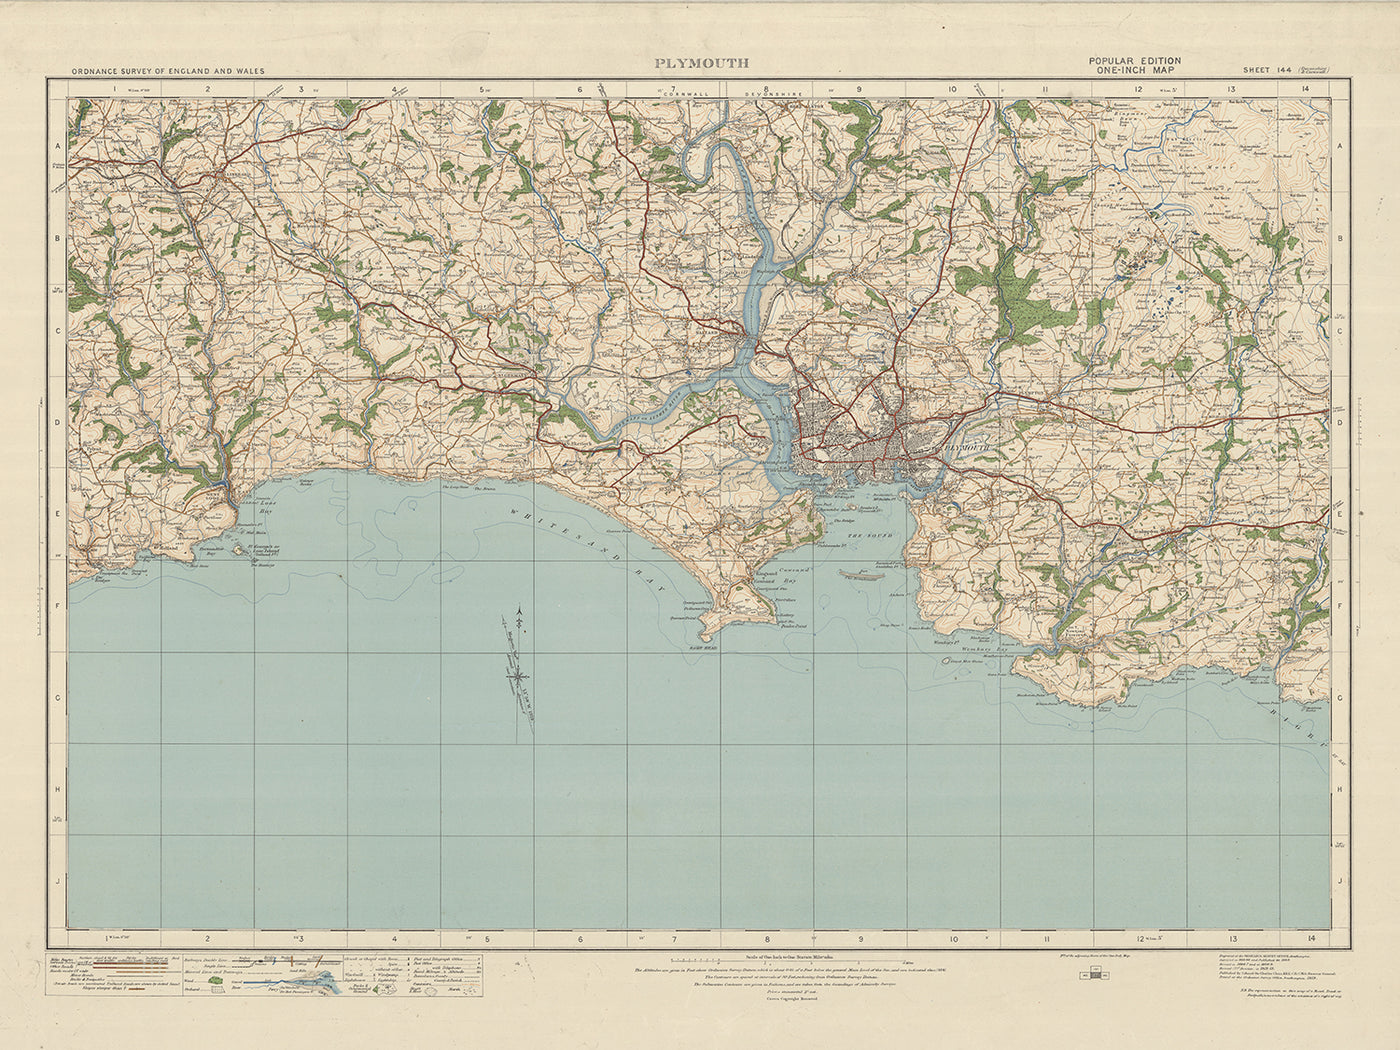 Old Ordnance Survey Map, Sheet 144 - Plymouth, 1919-1926: Saltash, Liskeard, Torpoint, and Callington, with Dartmoor National Park, River Tamar, Royal Albert Bridge